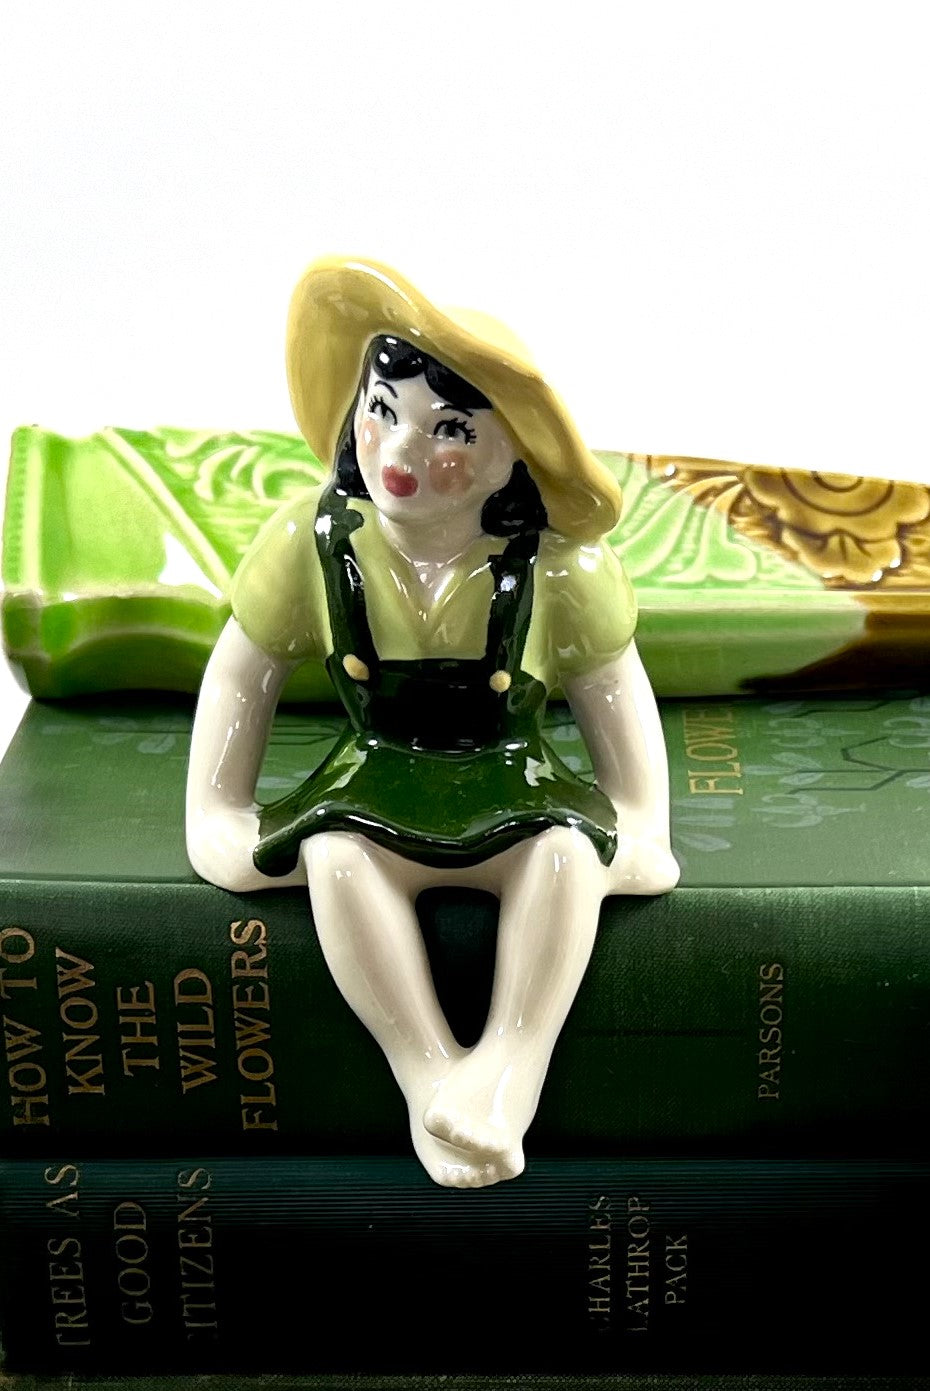 Ceramic Arts Studio Figurine, Garden Girl in Green Dress Shelf Sitter, 1940-1956